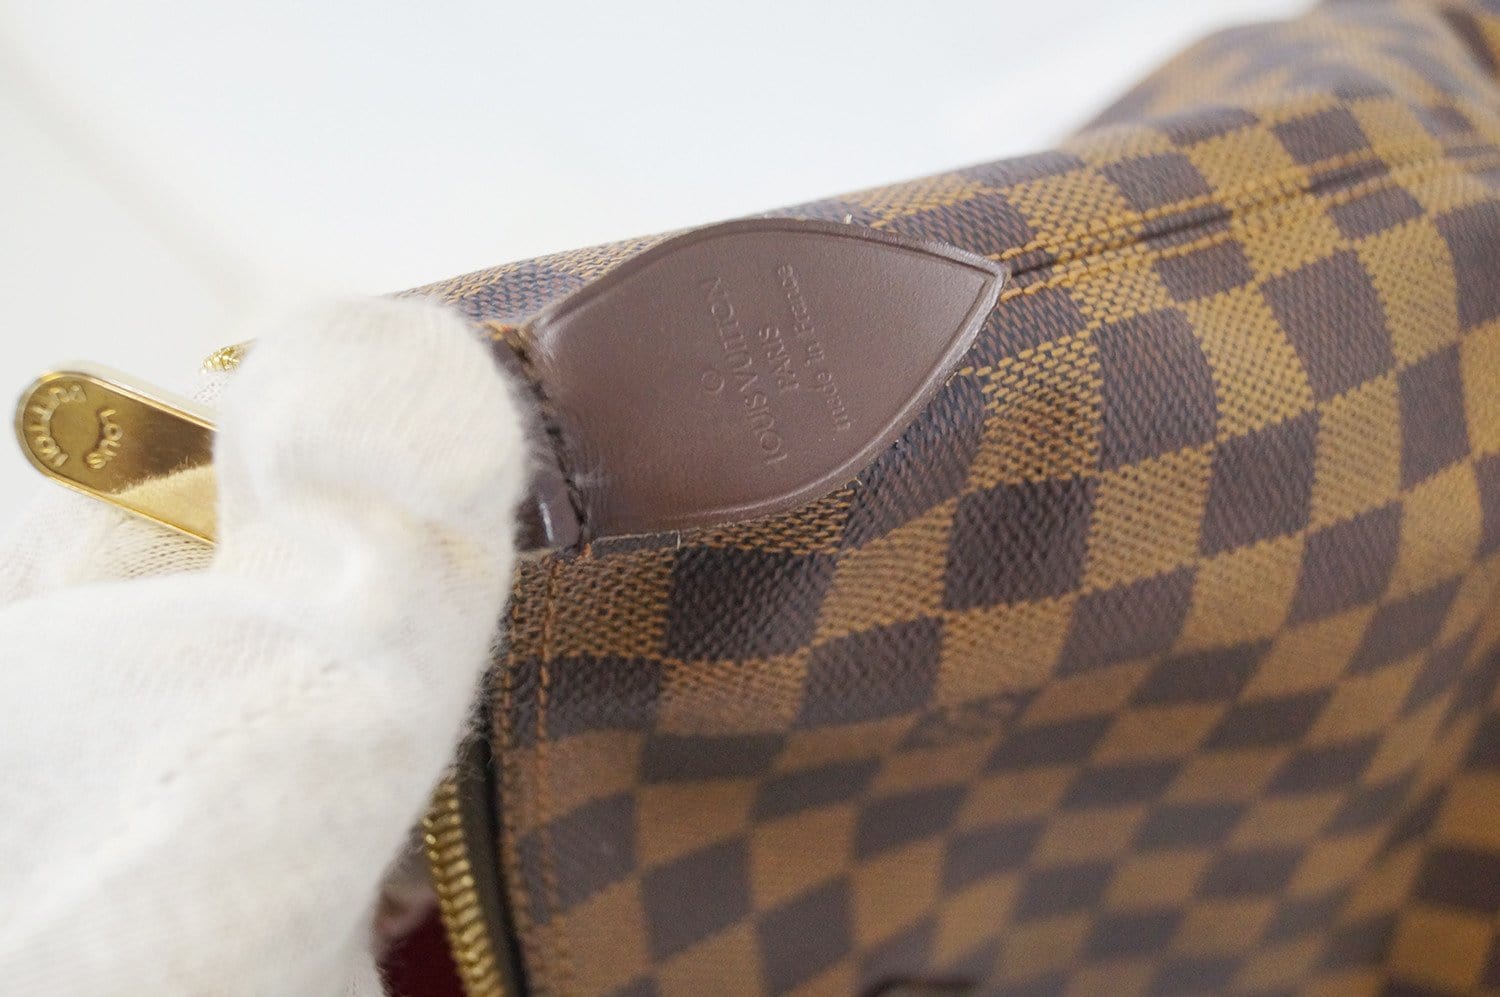 Authentic Louis Vuitton Saleya MM Damier Ebene Tote bag Shoulder